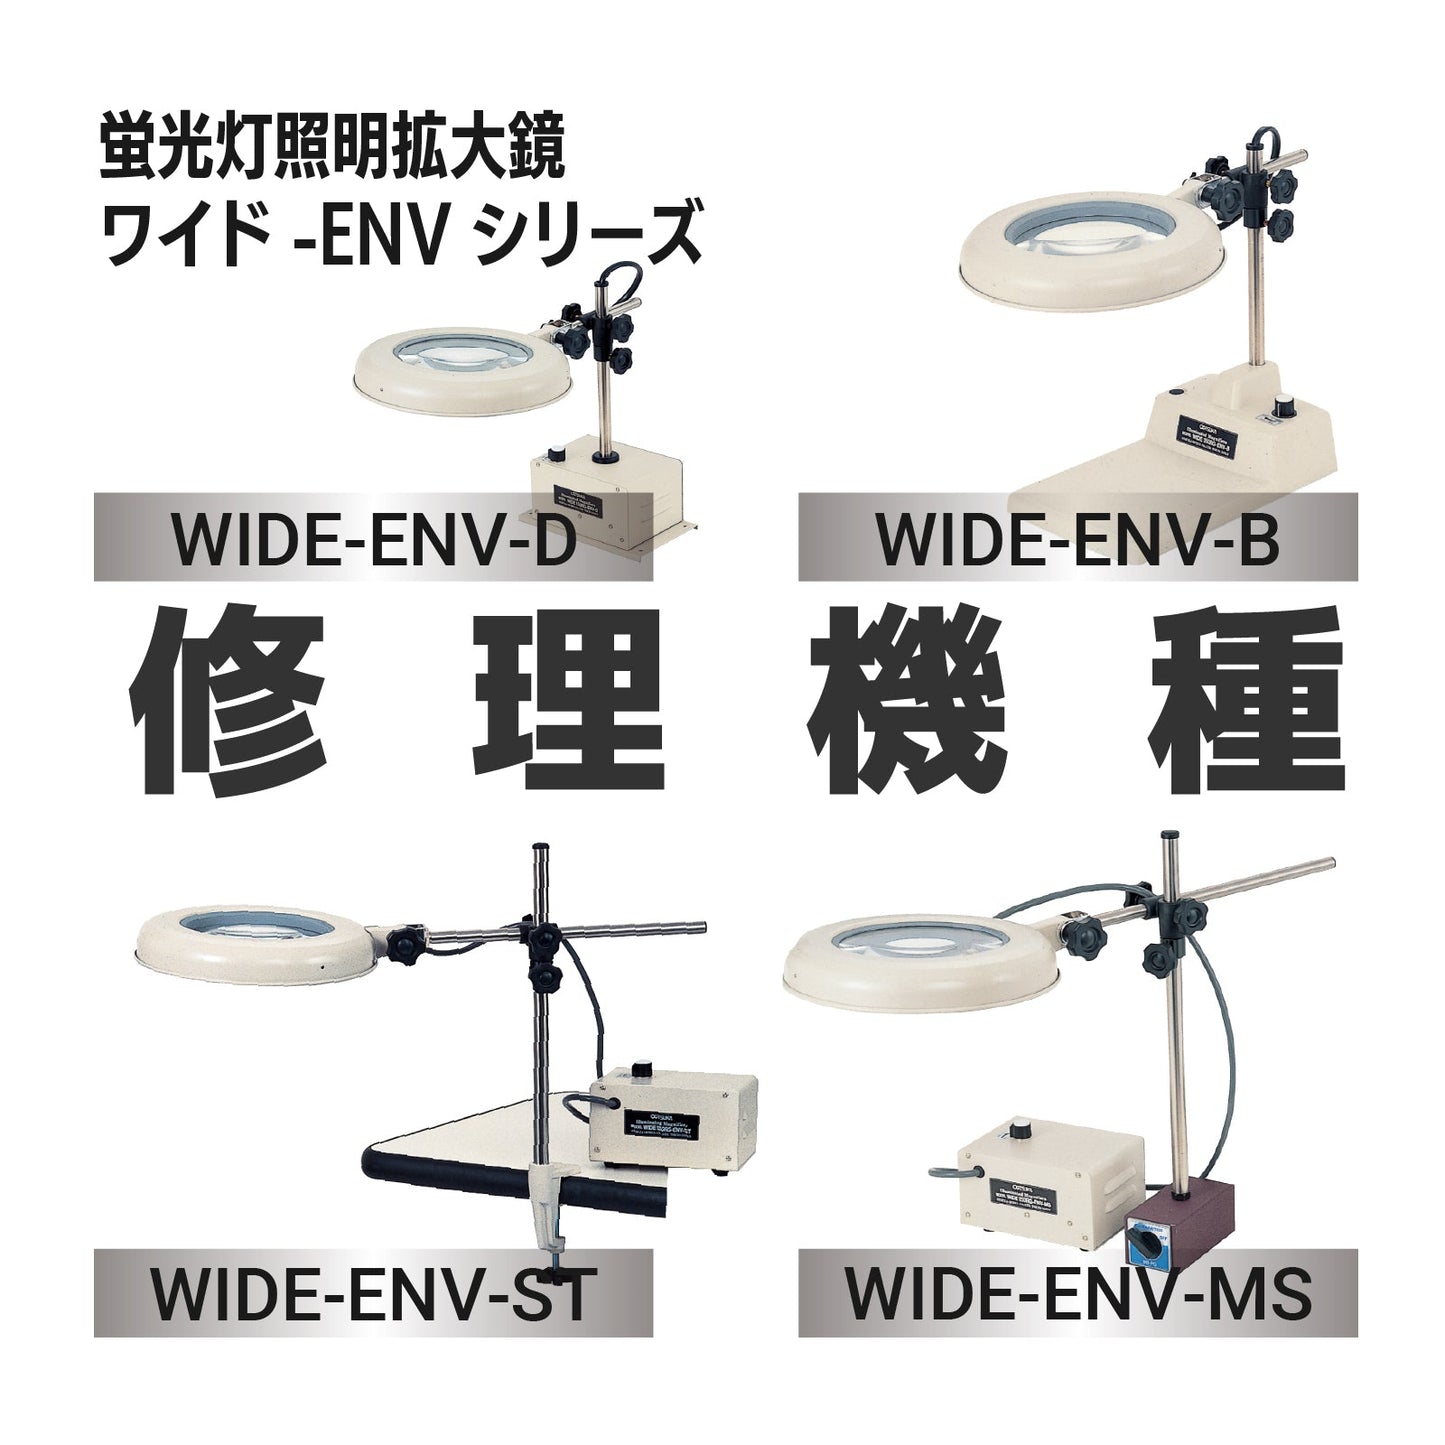 Serie Wide-ENV: Wide-ENV-B, D, MS, ST